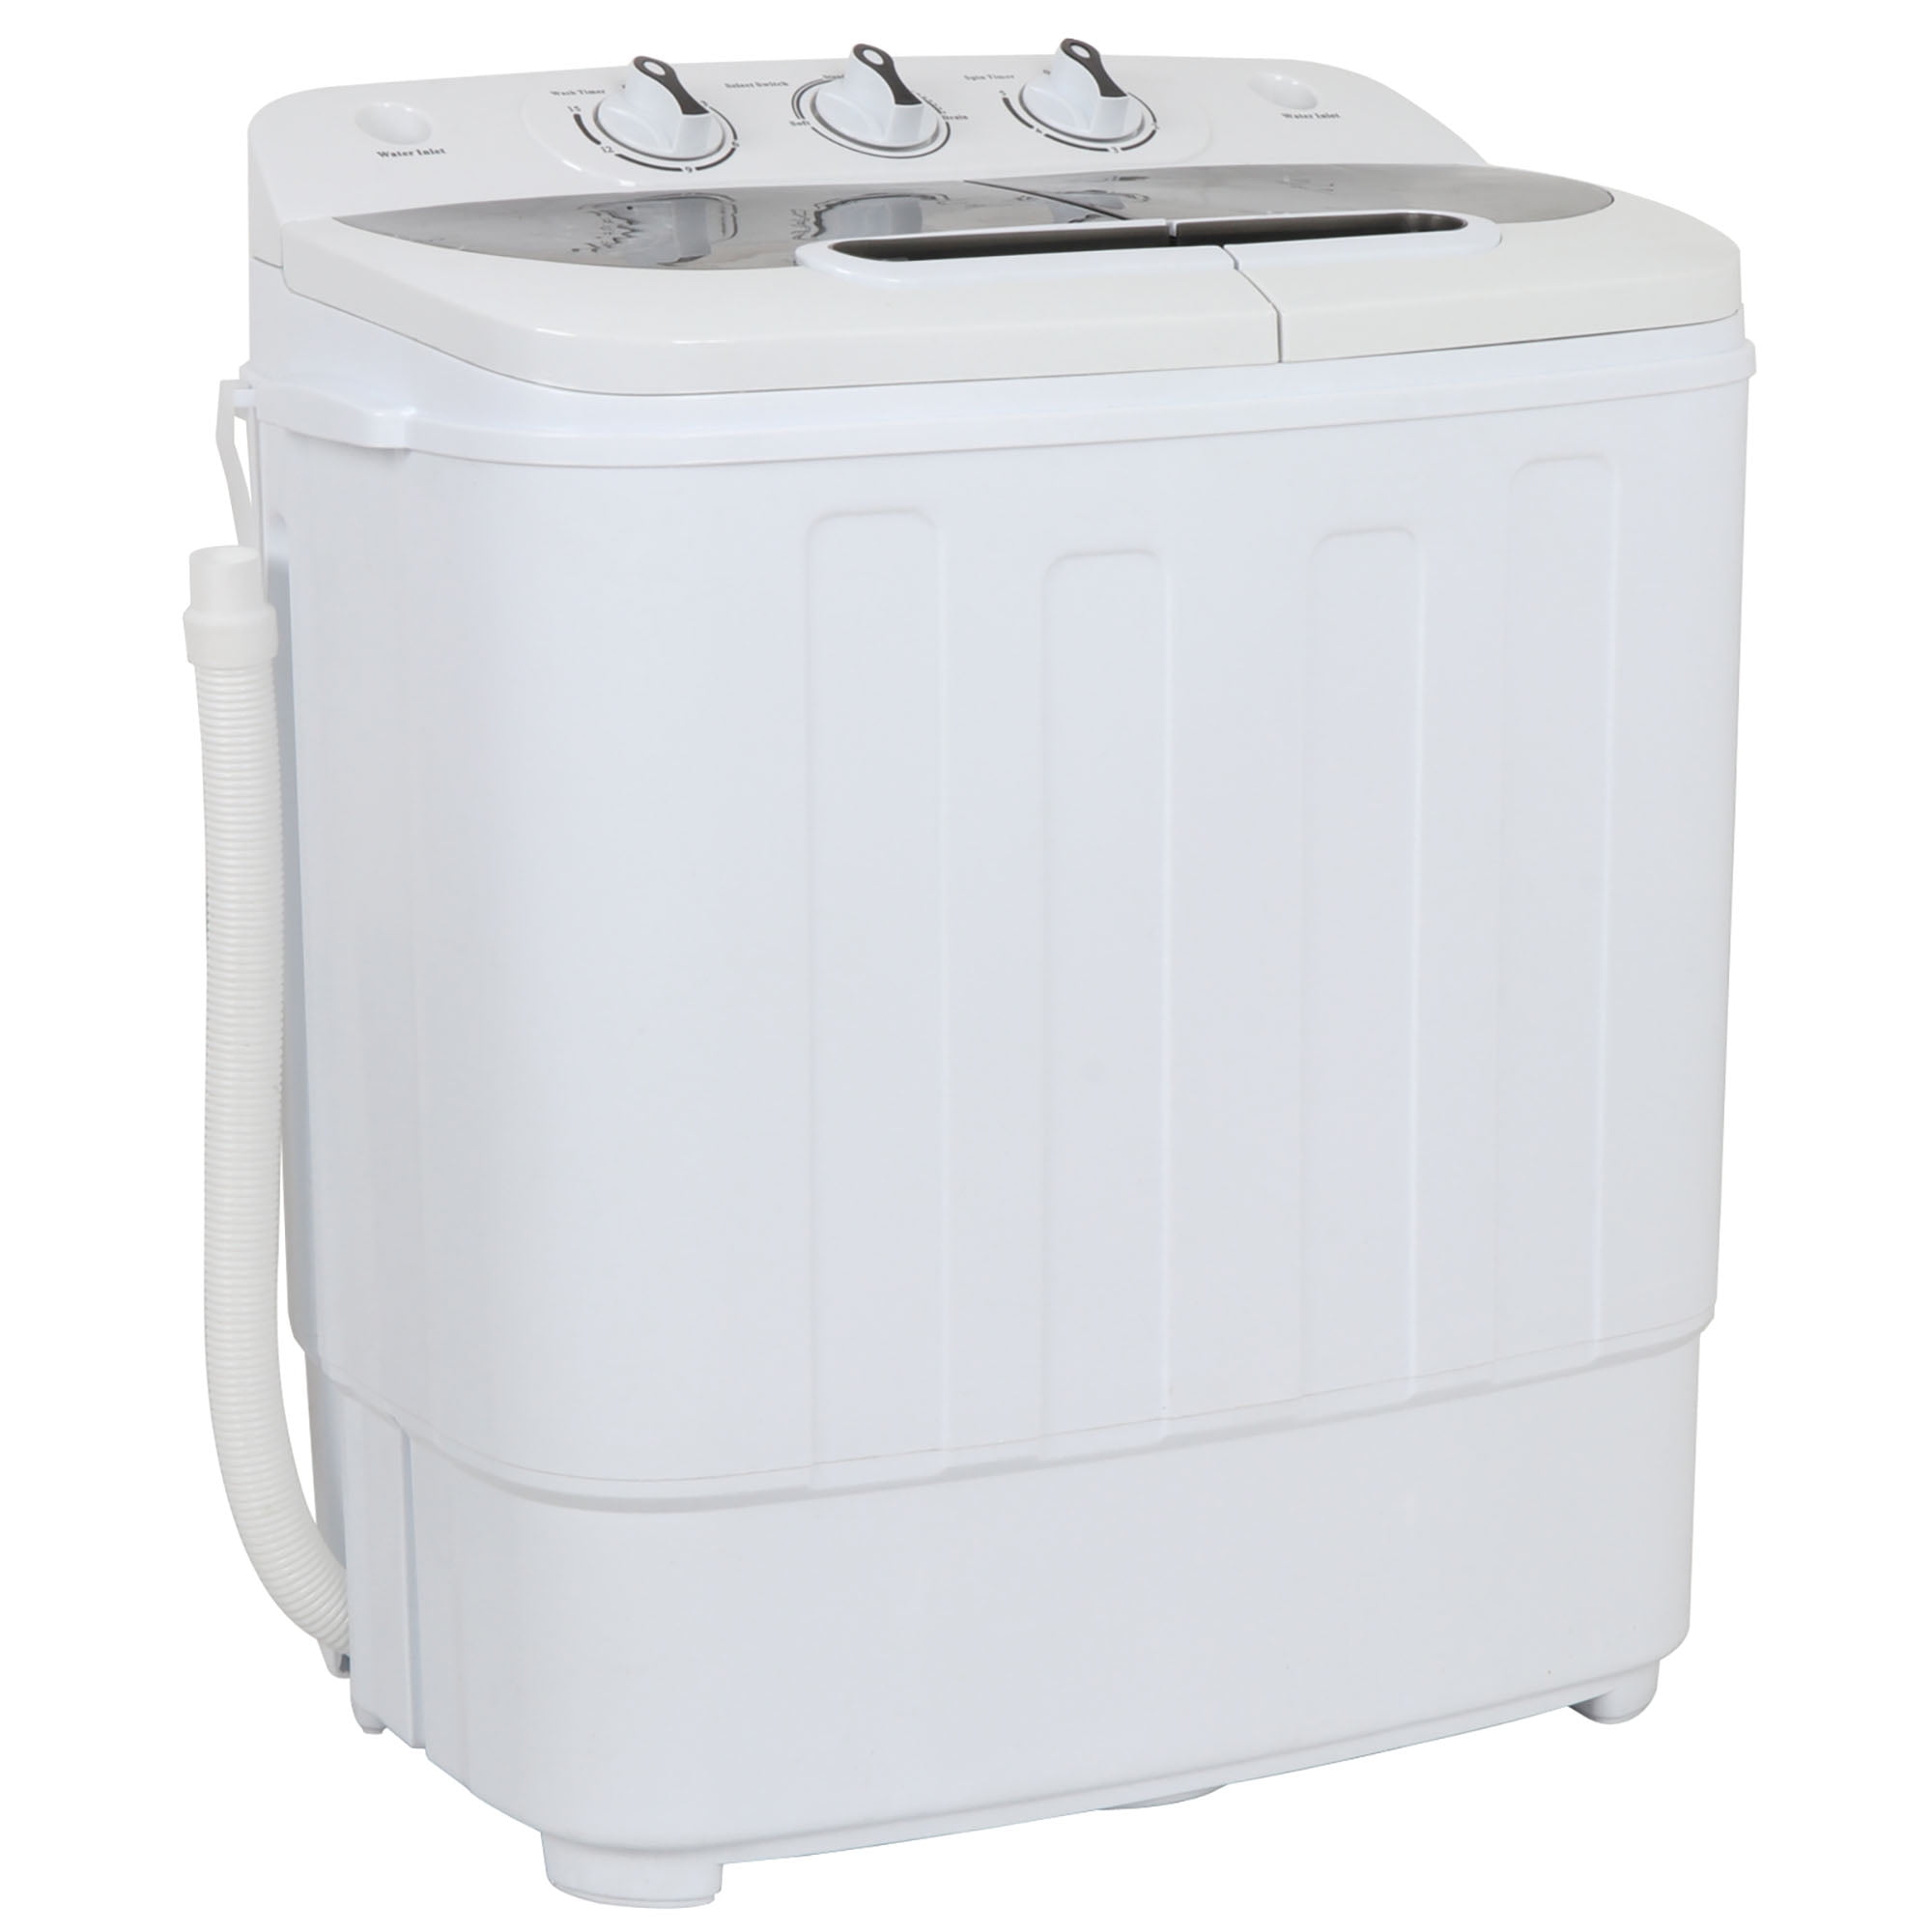 Panda Portable Washing Machine, 10 lbs. Capacity, 3 Water Levels